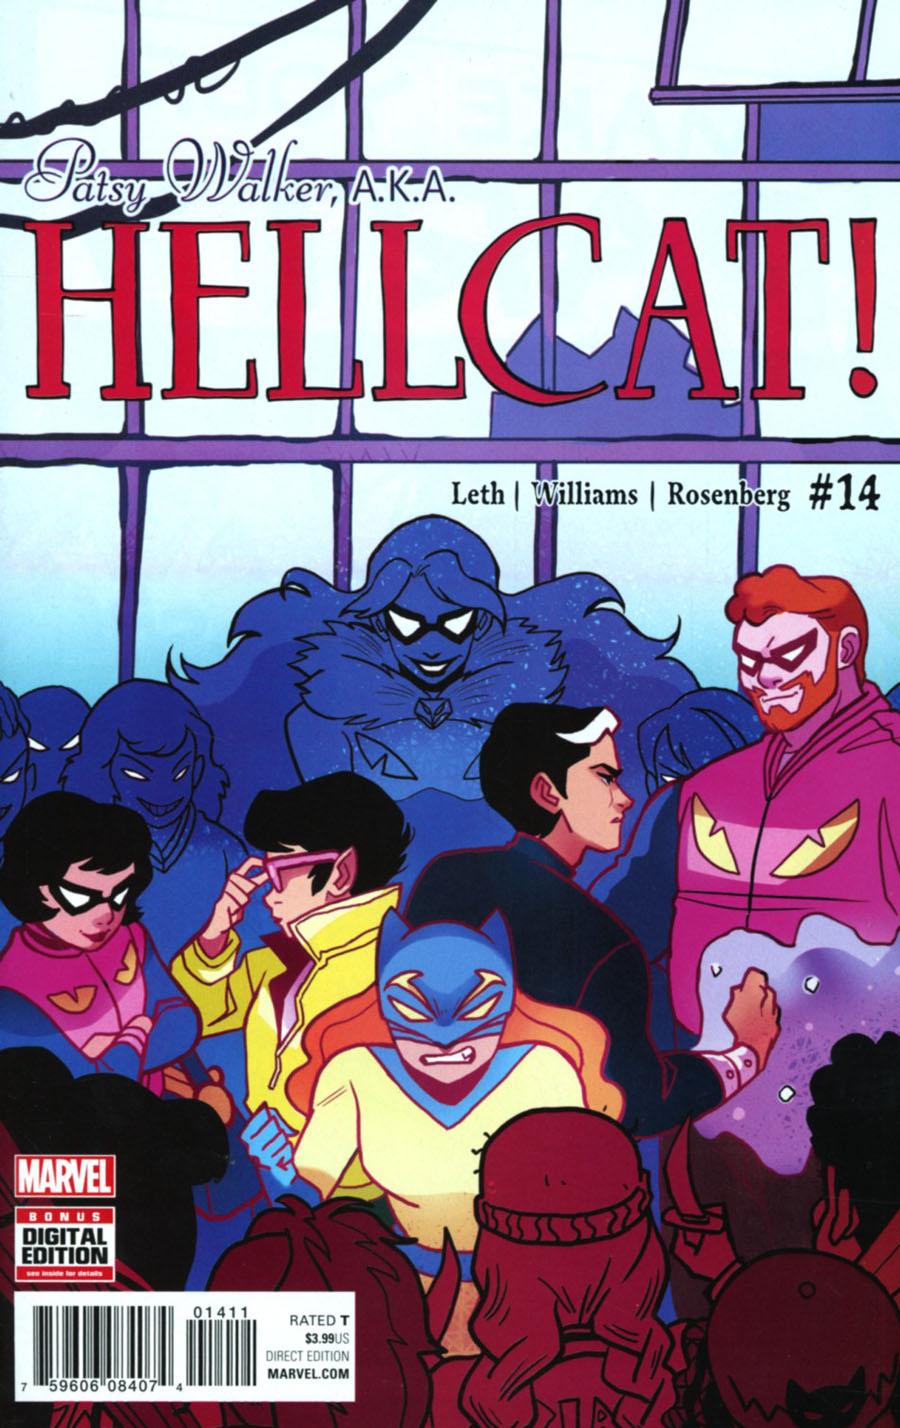 Patsy Walker AKA Hellcat Vol. 1 #14